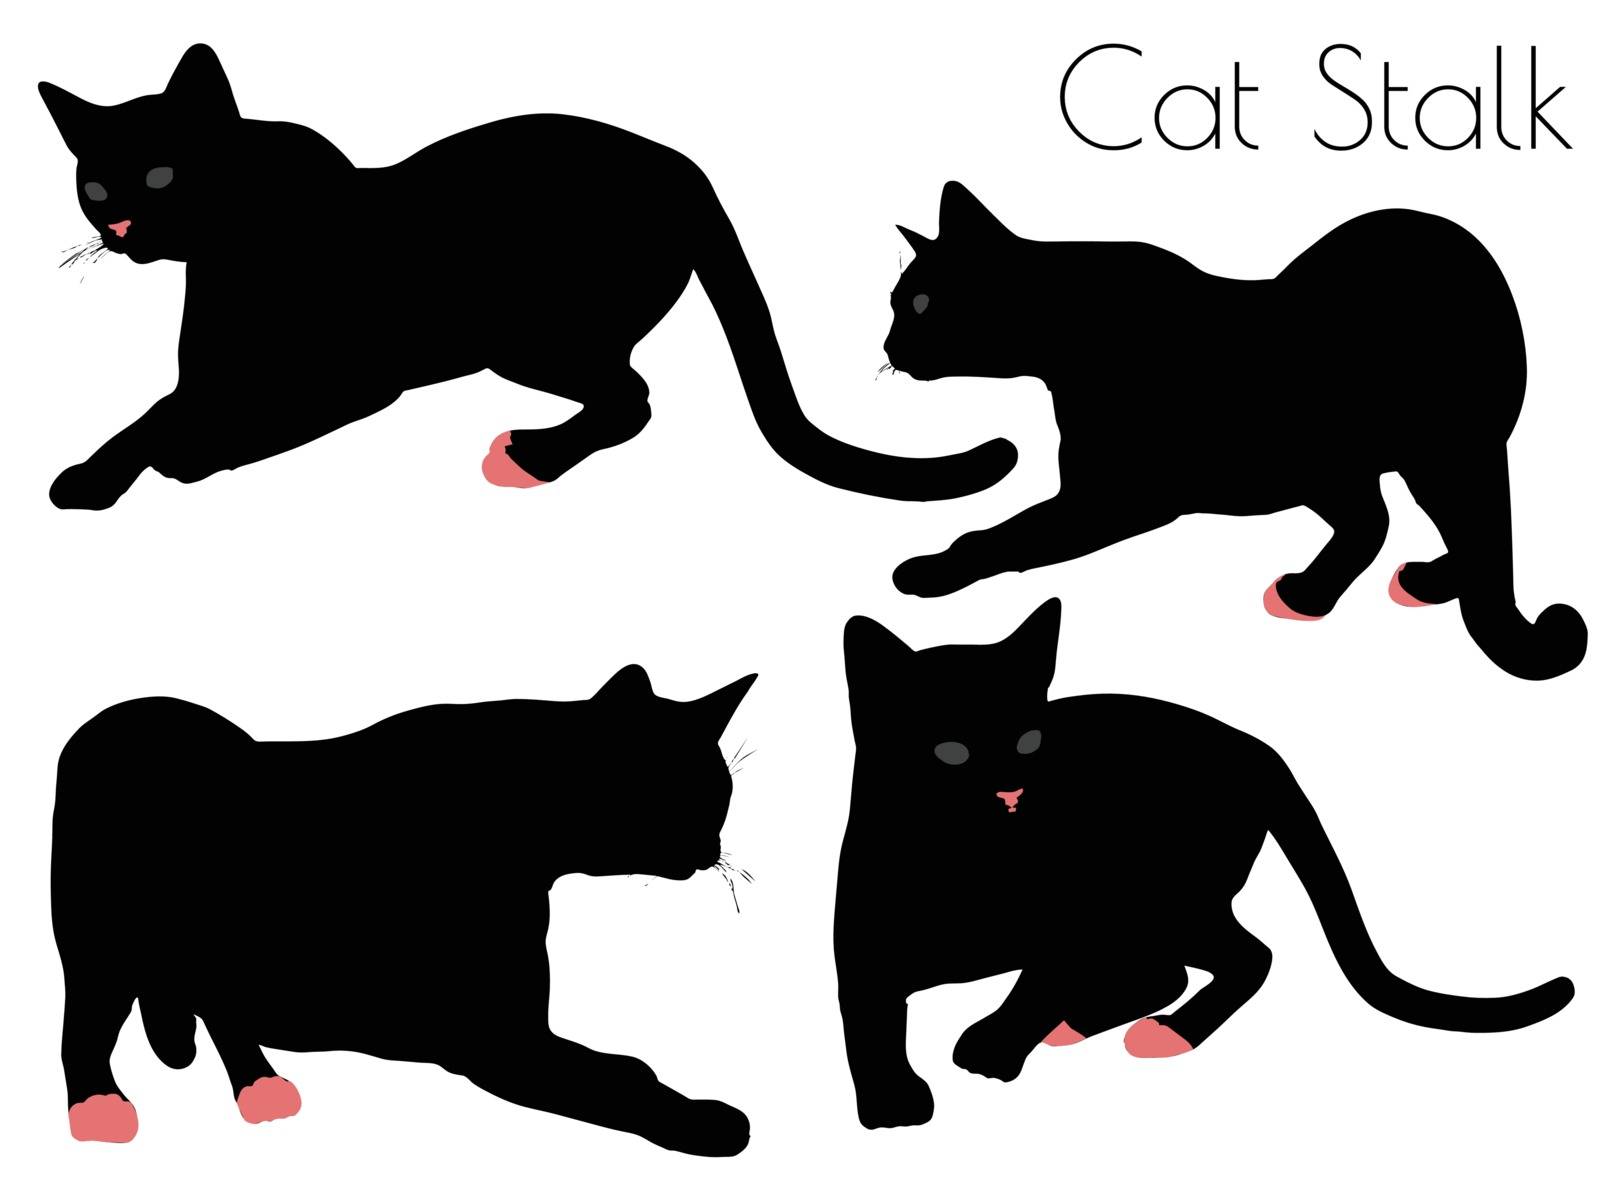 EPS 10 vector illustration of cat silhouette in Stalk Pose